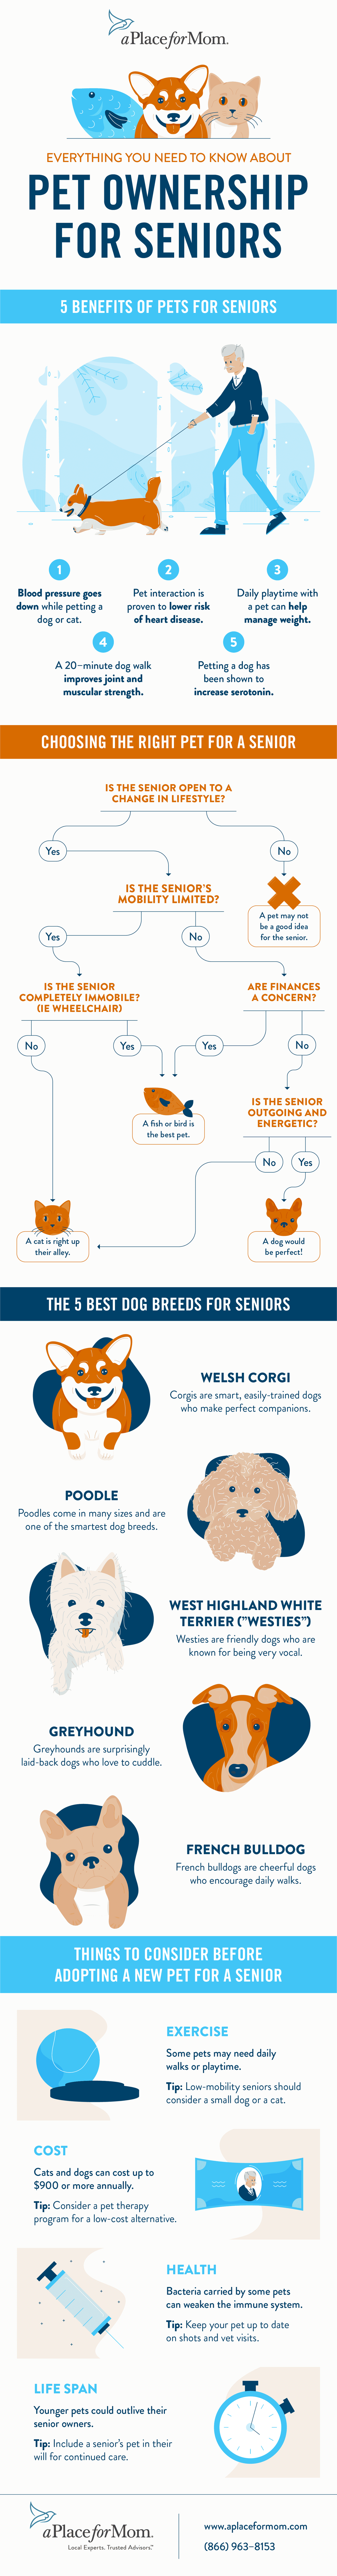 Pets-For-Seniors